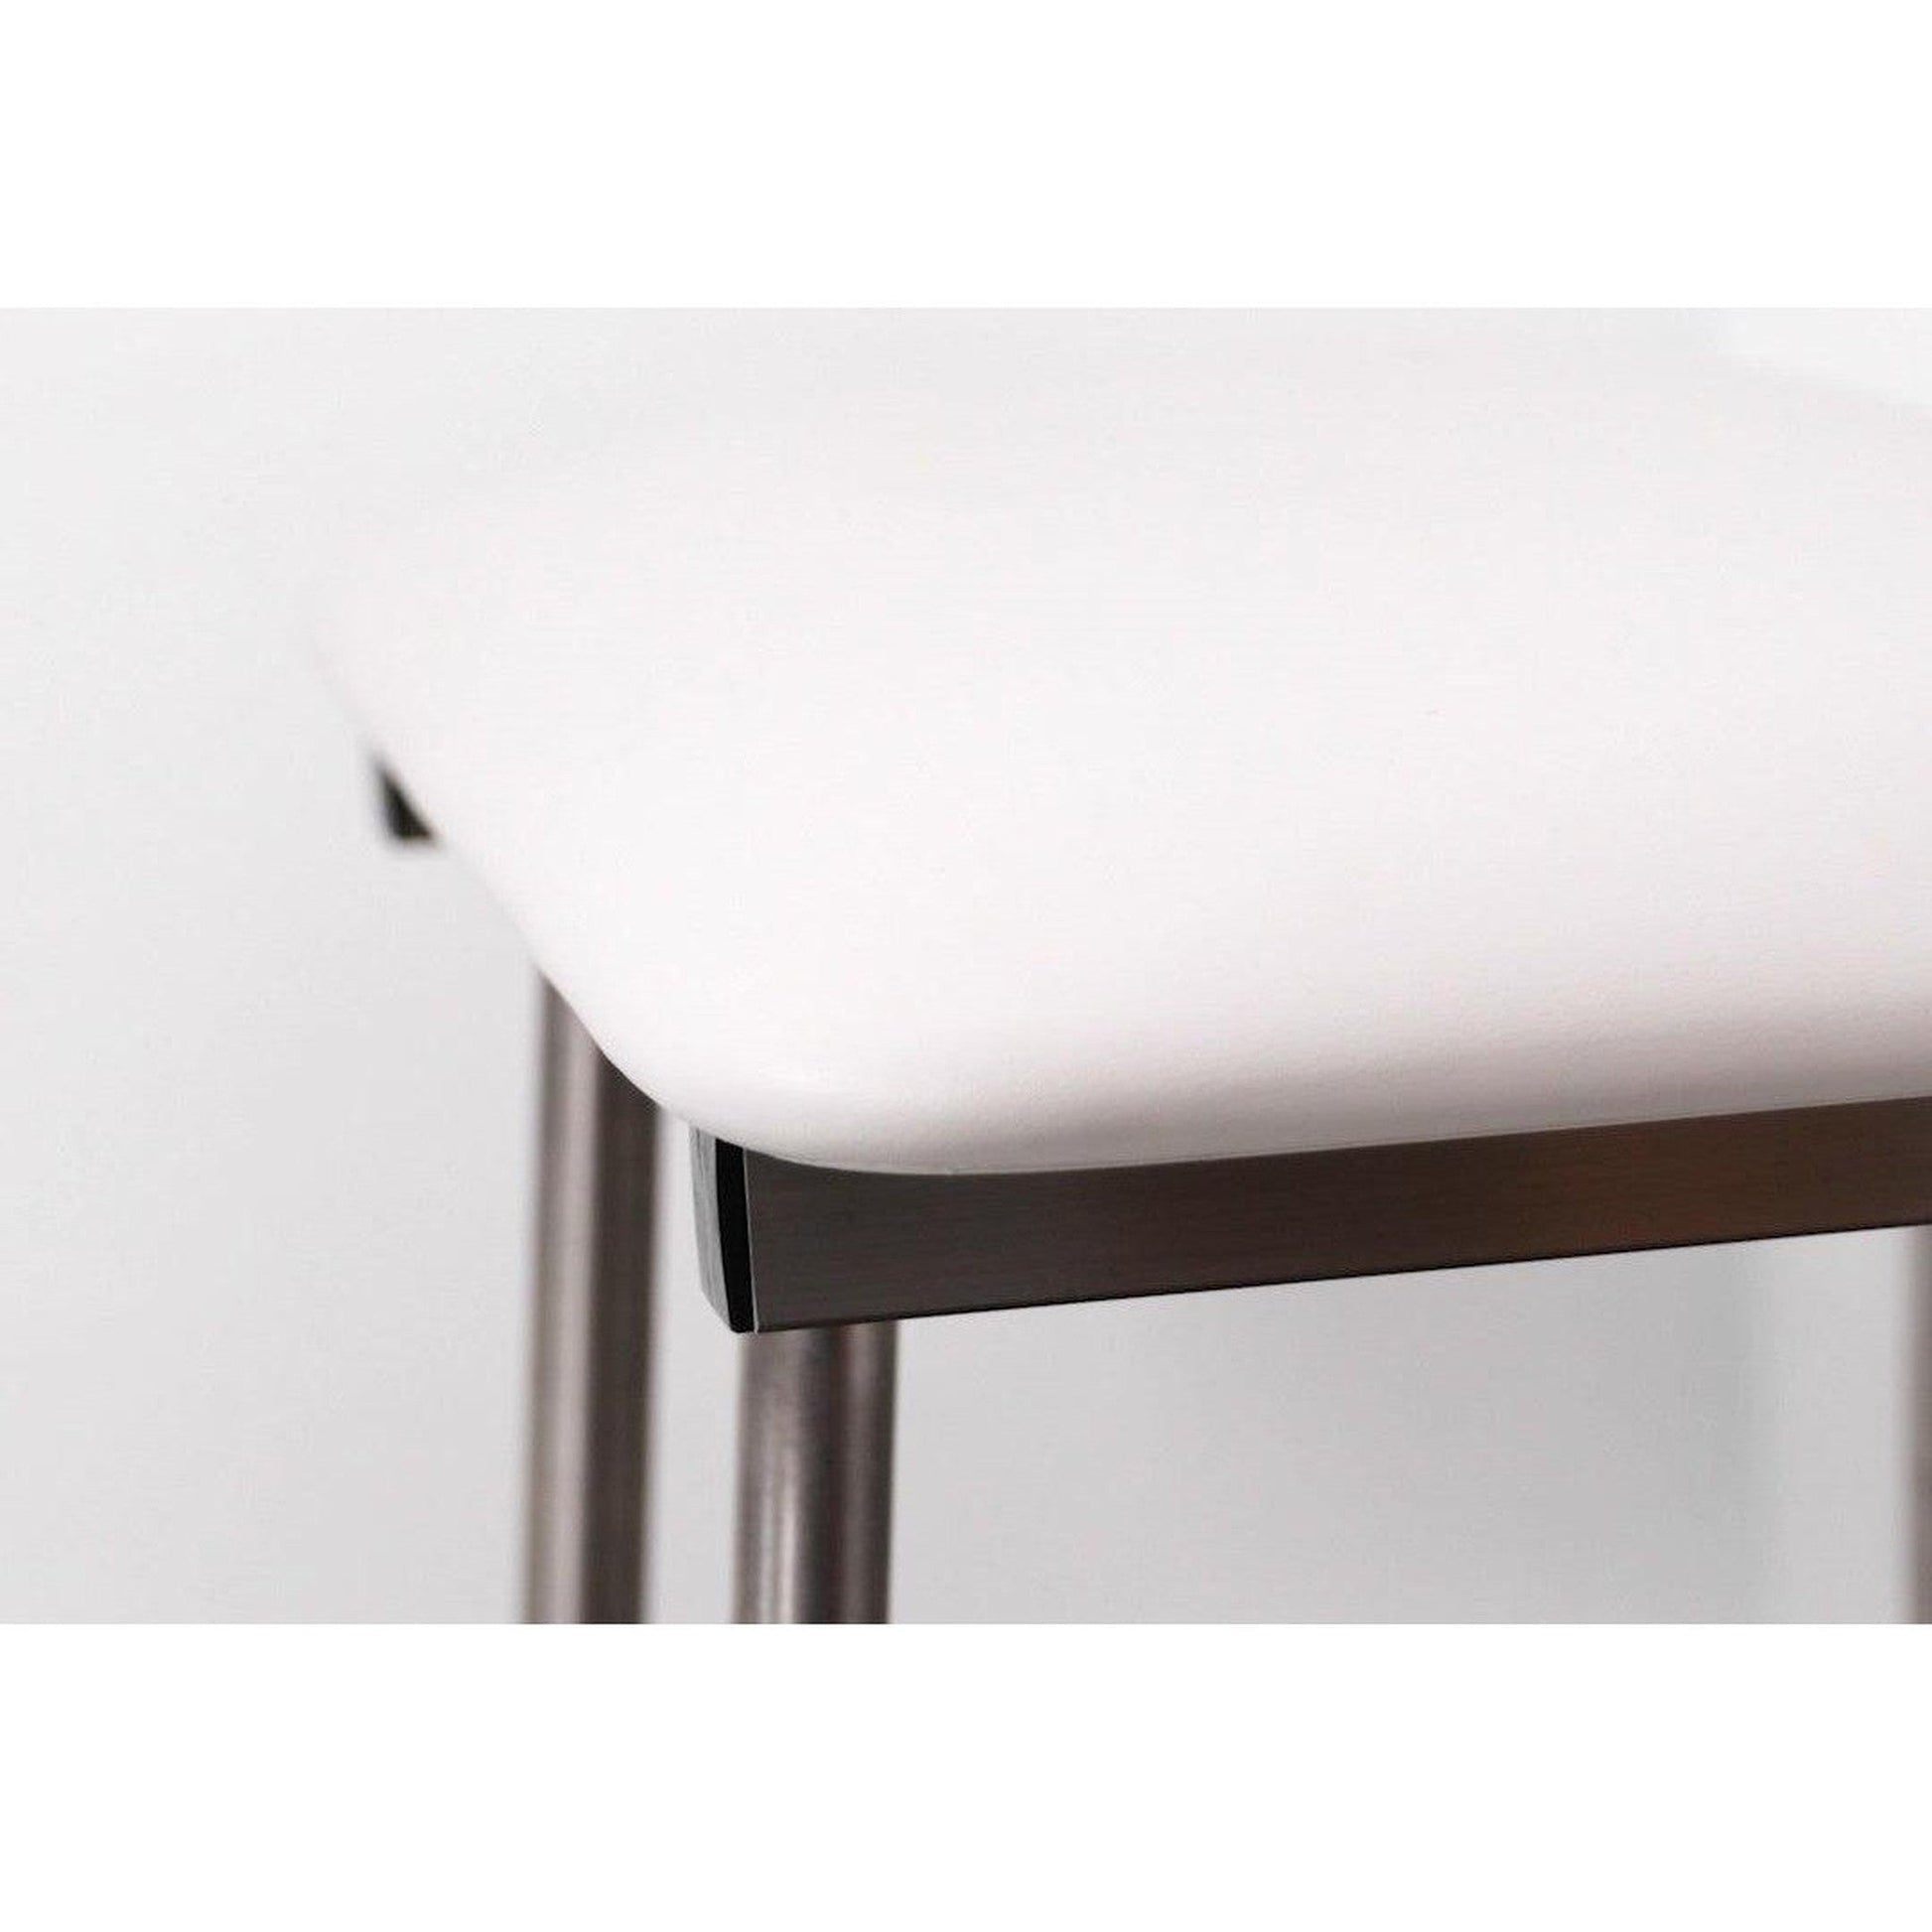 Seachrome Signature Series 28" W x 15" D Naugahyde White Cushion Seat Top Bench Shower Seat With Swing-Down Legs